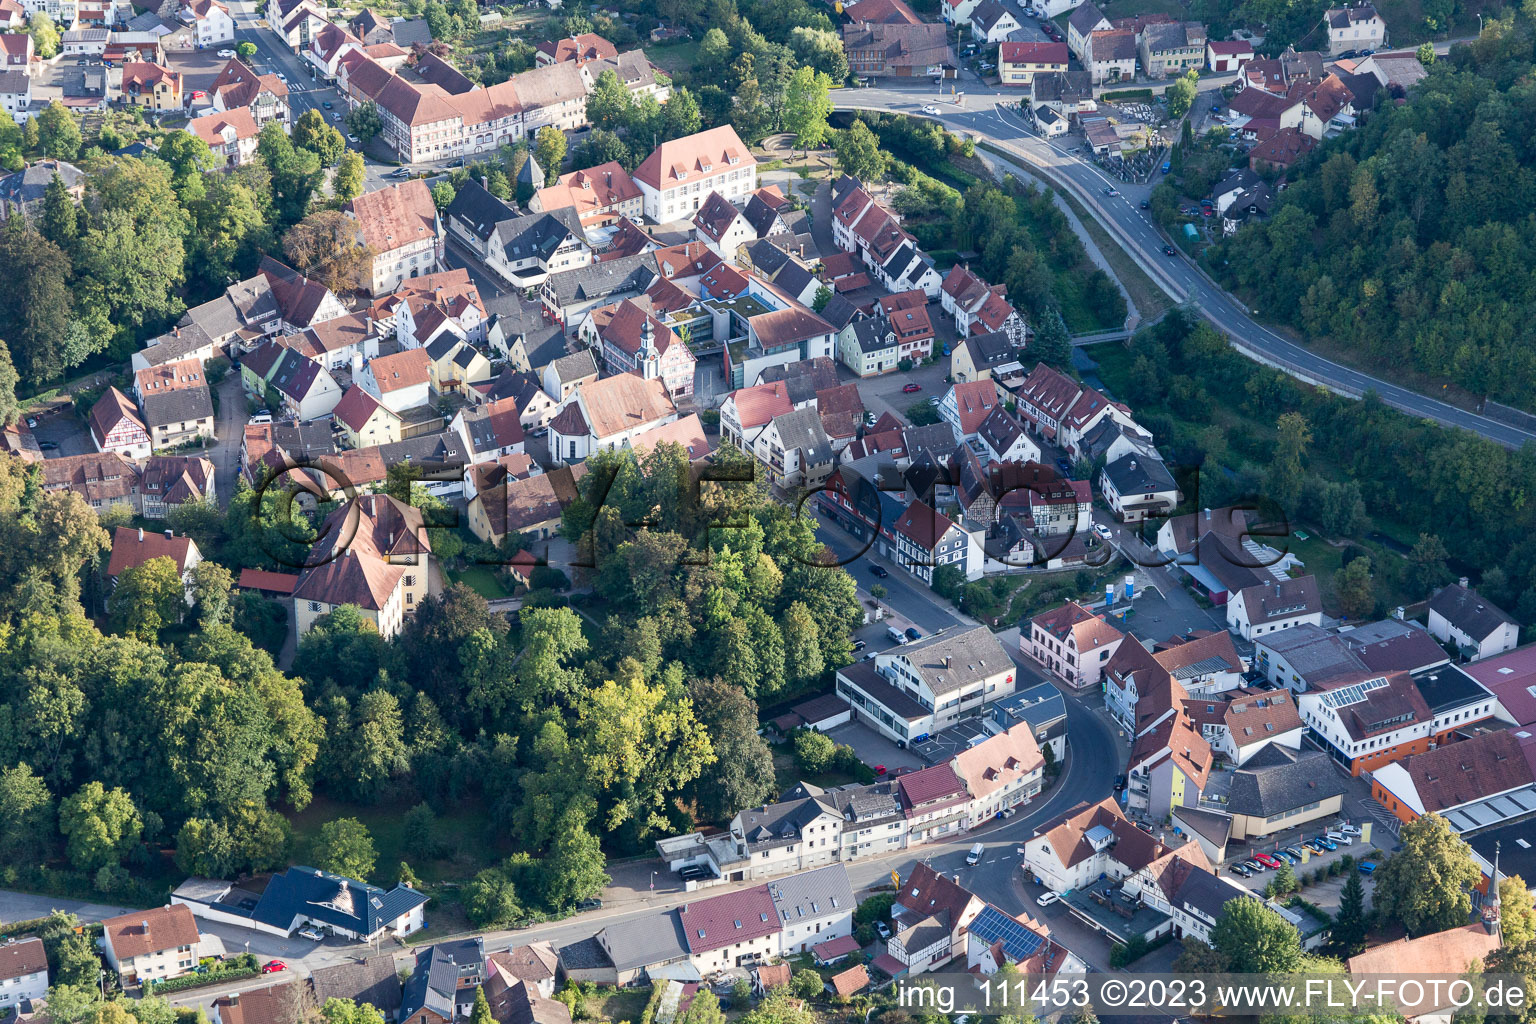 Adelsheim dans le département Bade-Wurtemberg, Allemagne vue d'en haut